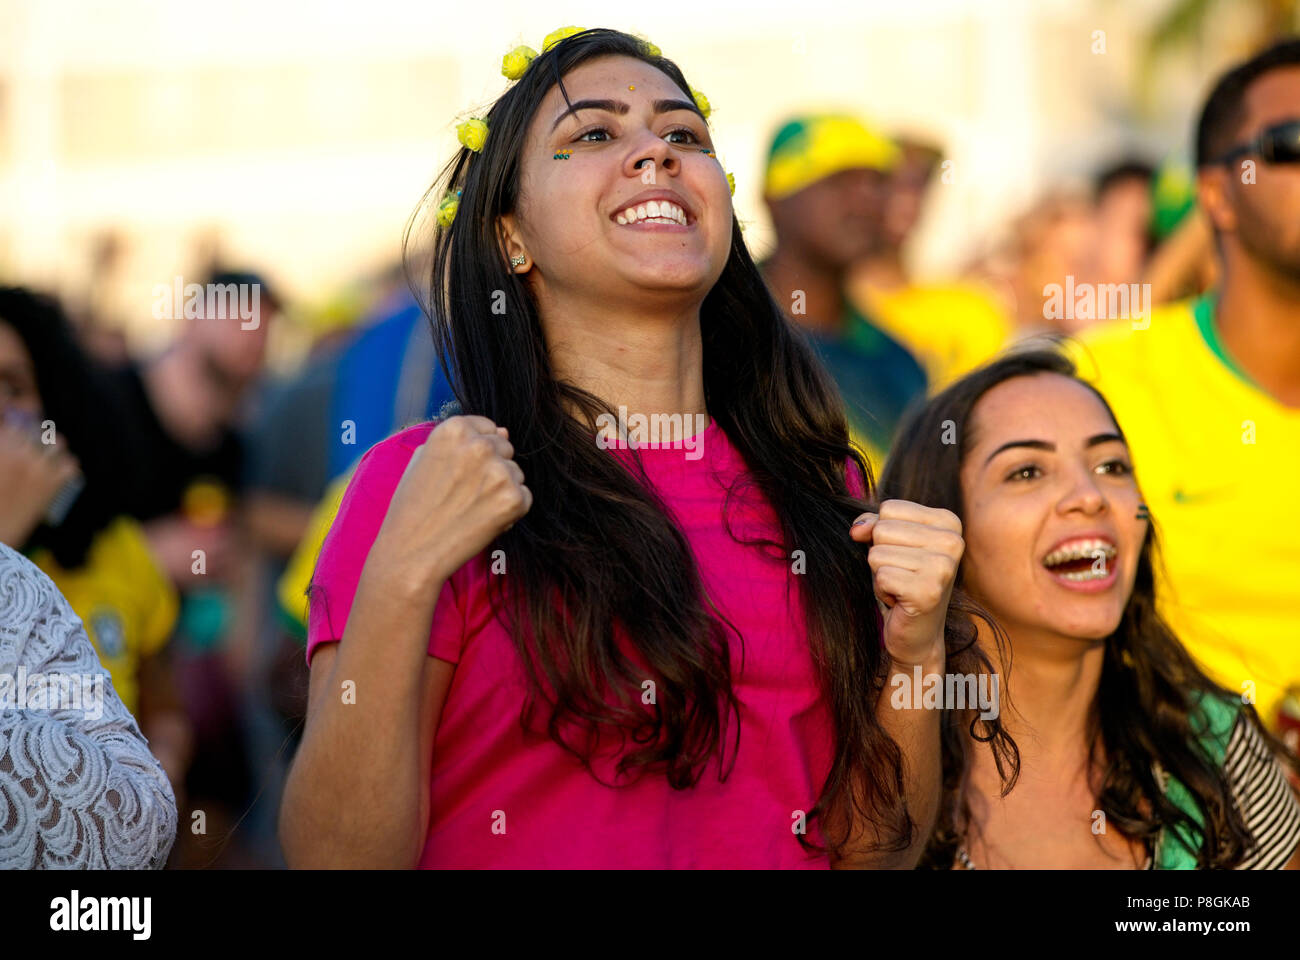 Wm - Juli 6, 2018: Brasilien Fußball-Fans feiern Ziel ihrer Mannschaft gegen Belgien, wie Sie live in Rio de Janeiro beobachten Stockfoto